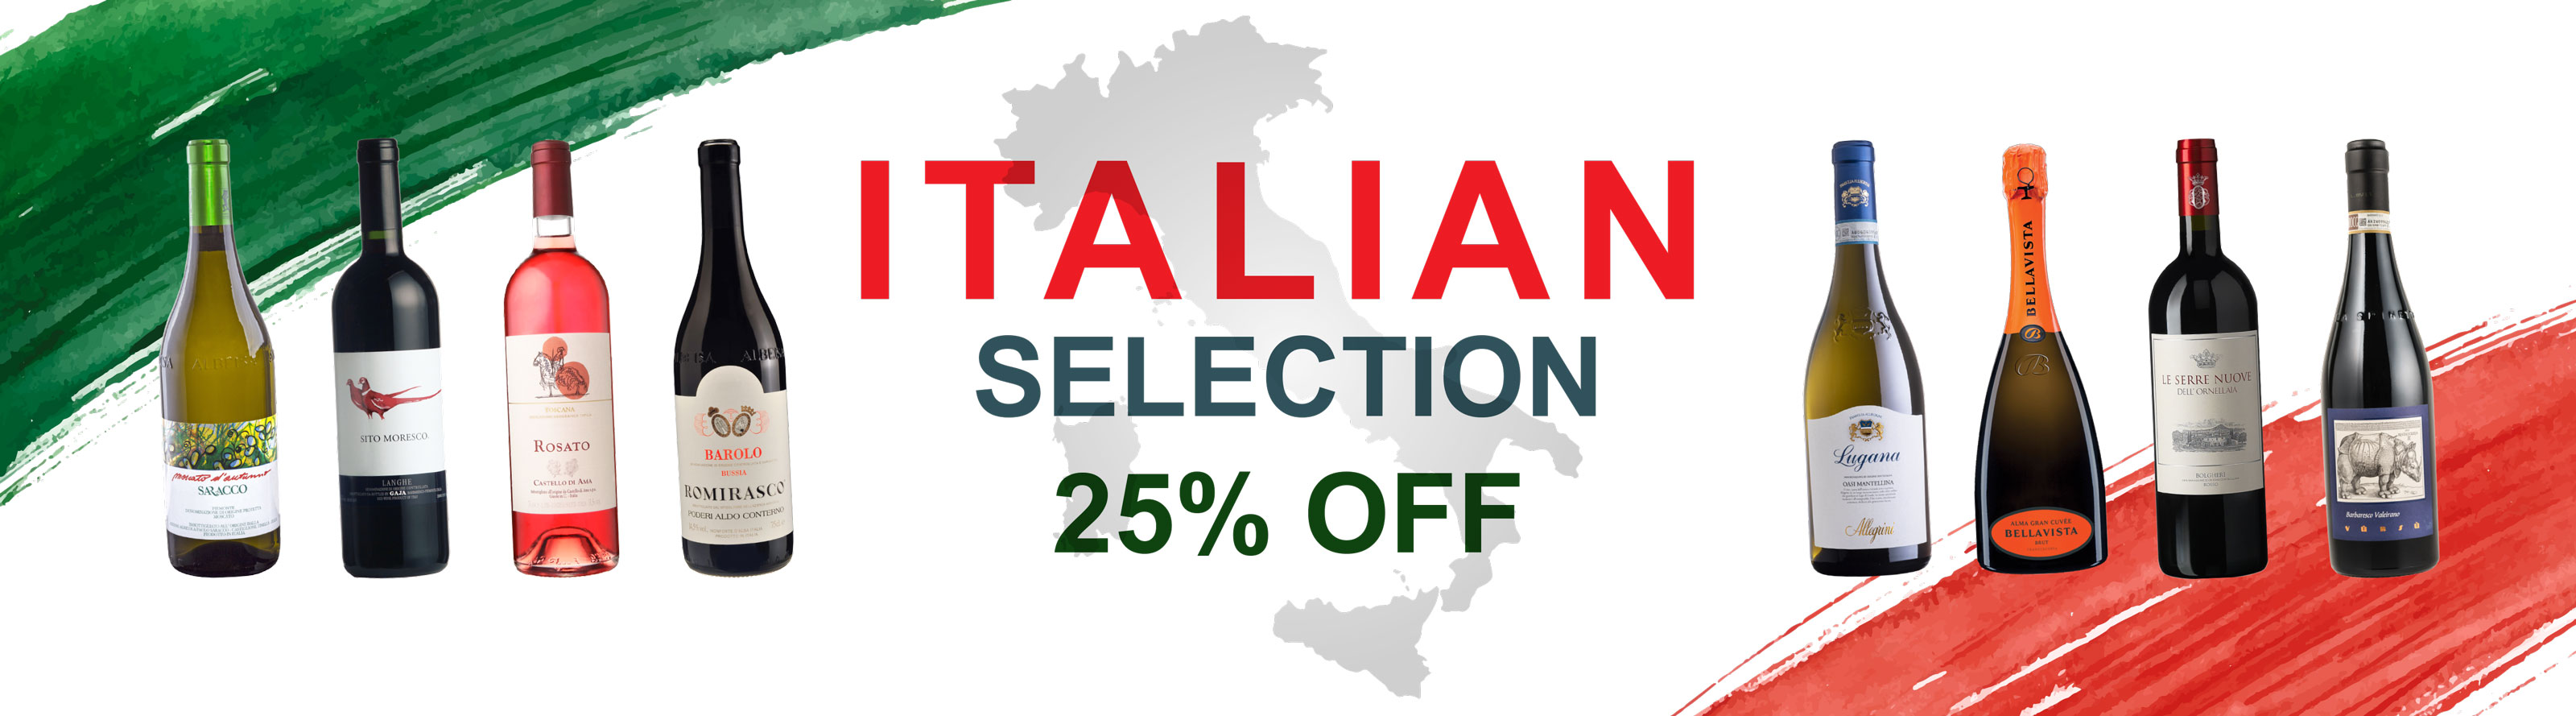 Italian Selection